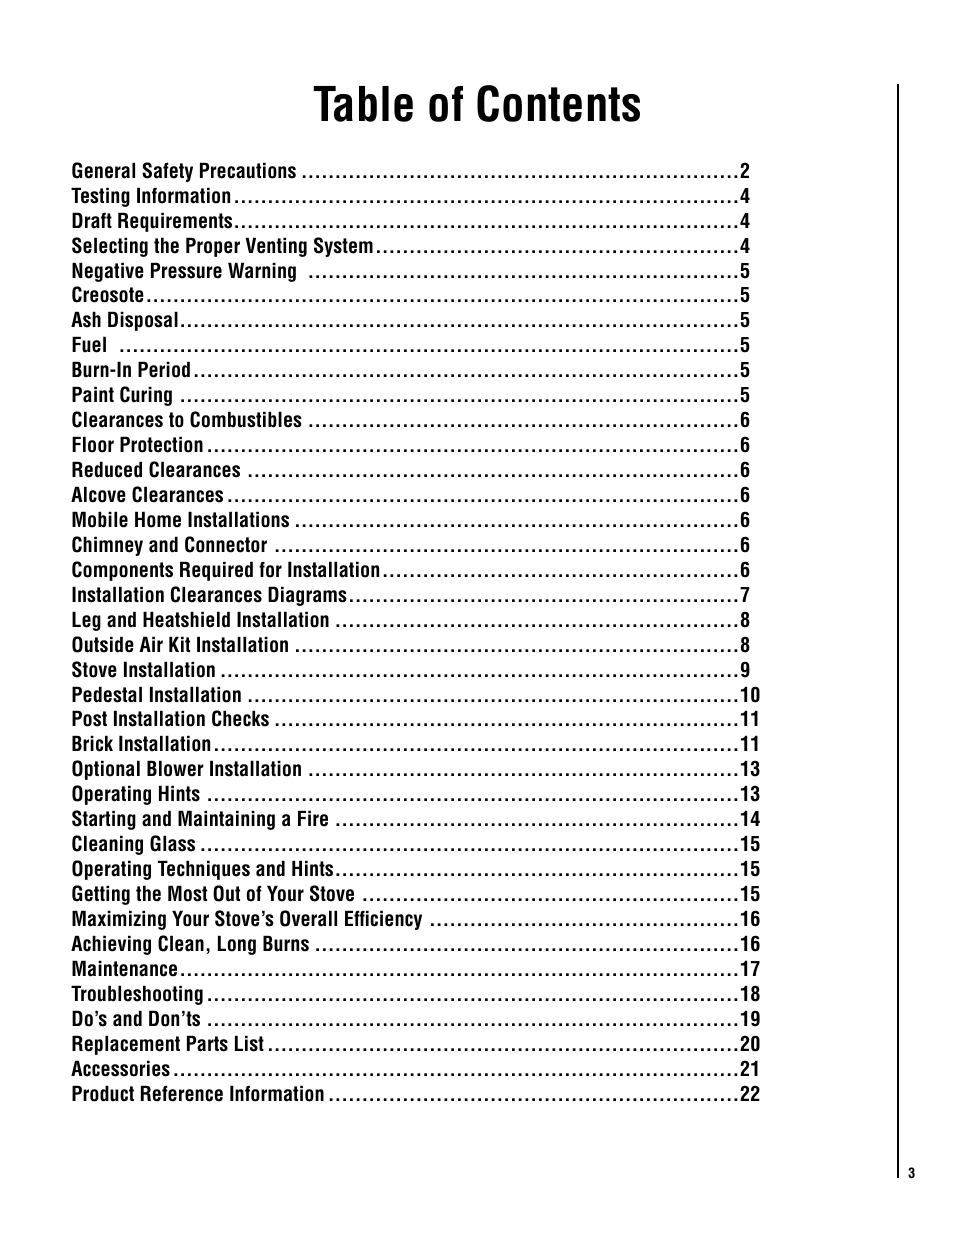 LG MODEL STRIKER S160 User Manual | Page 3 / 22